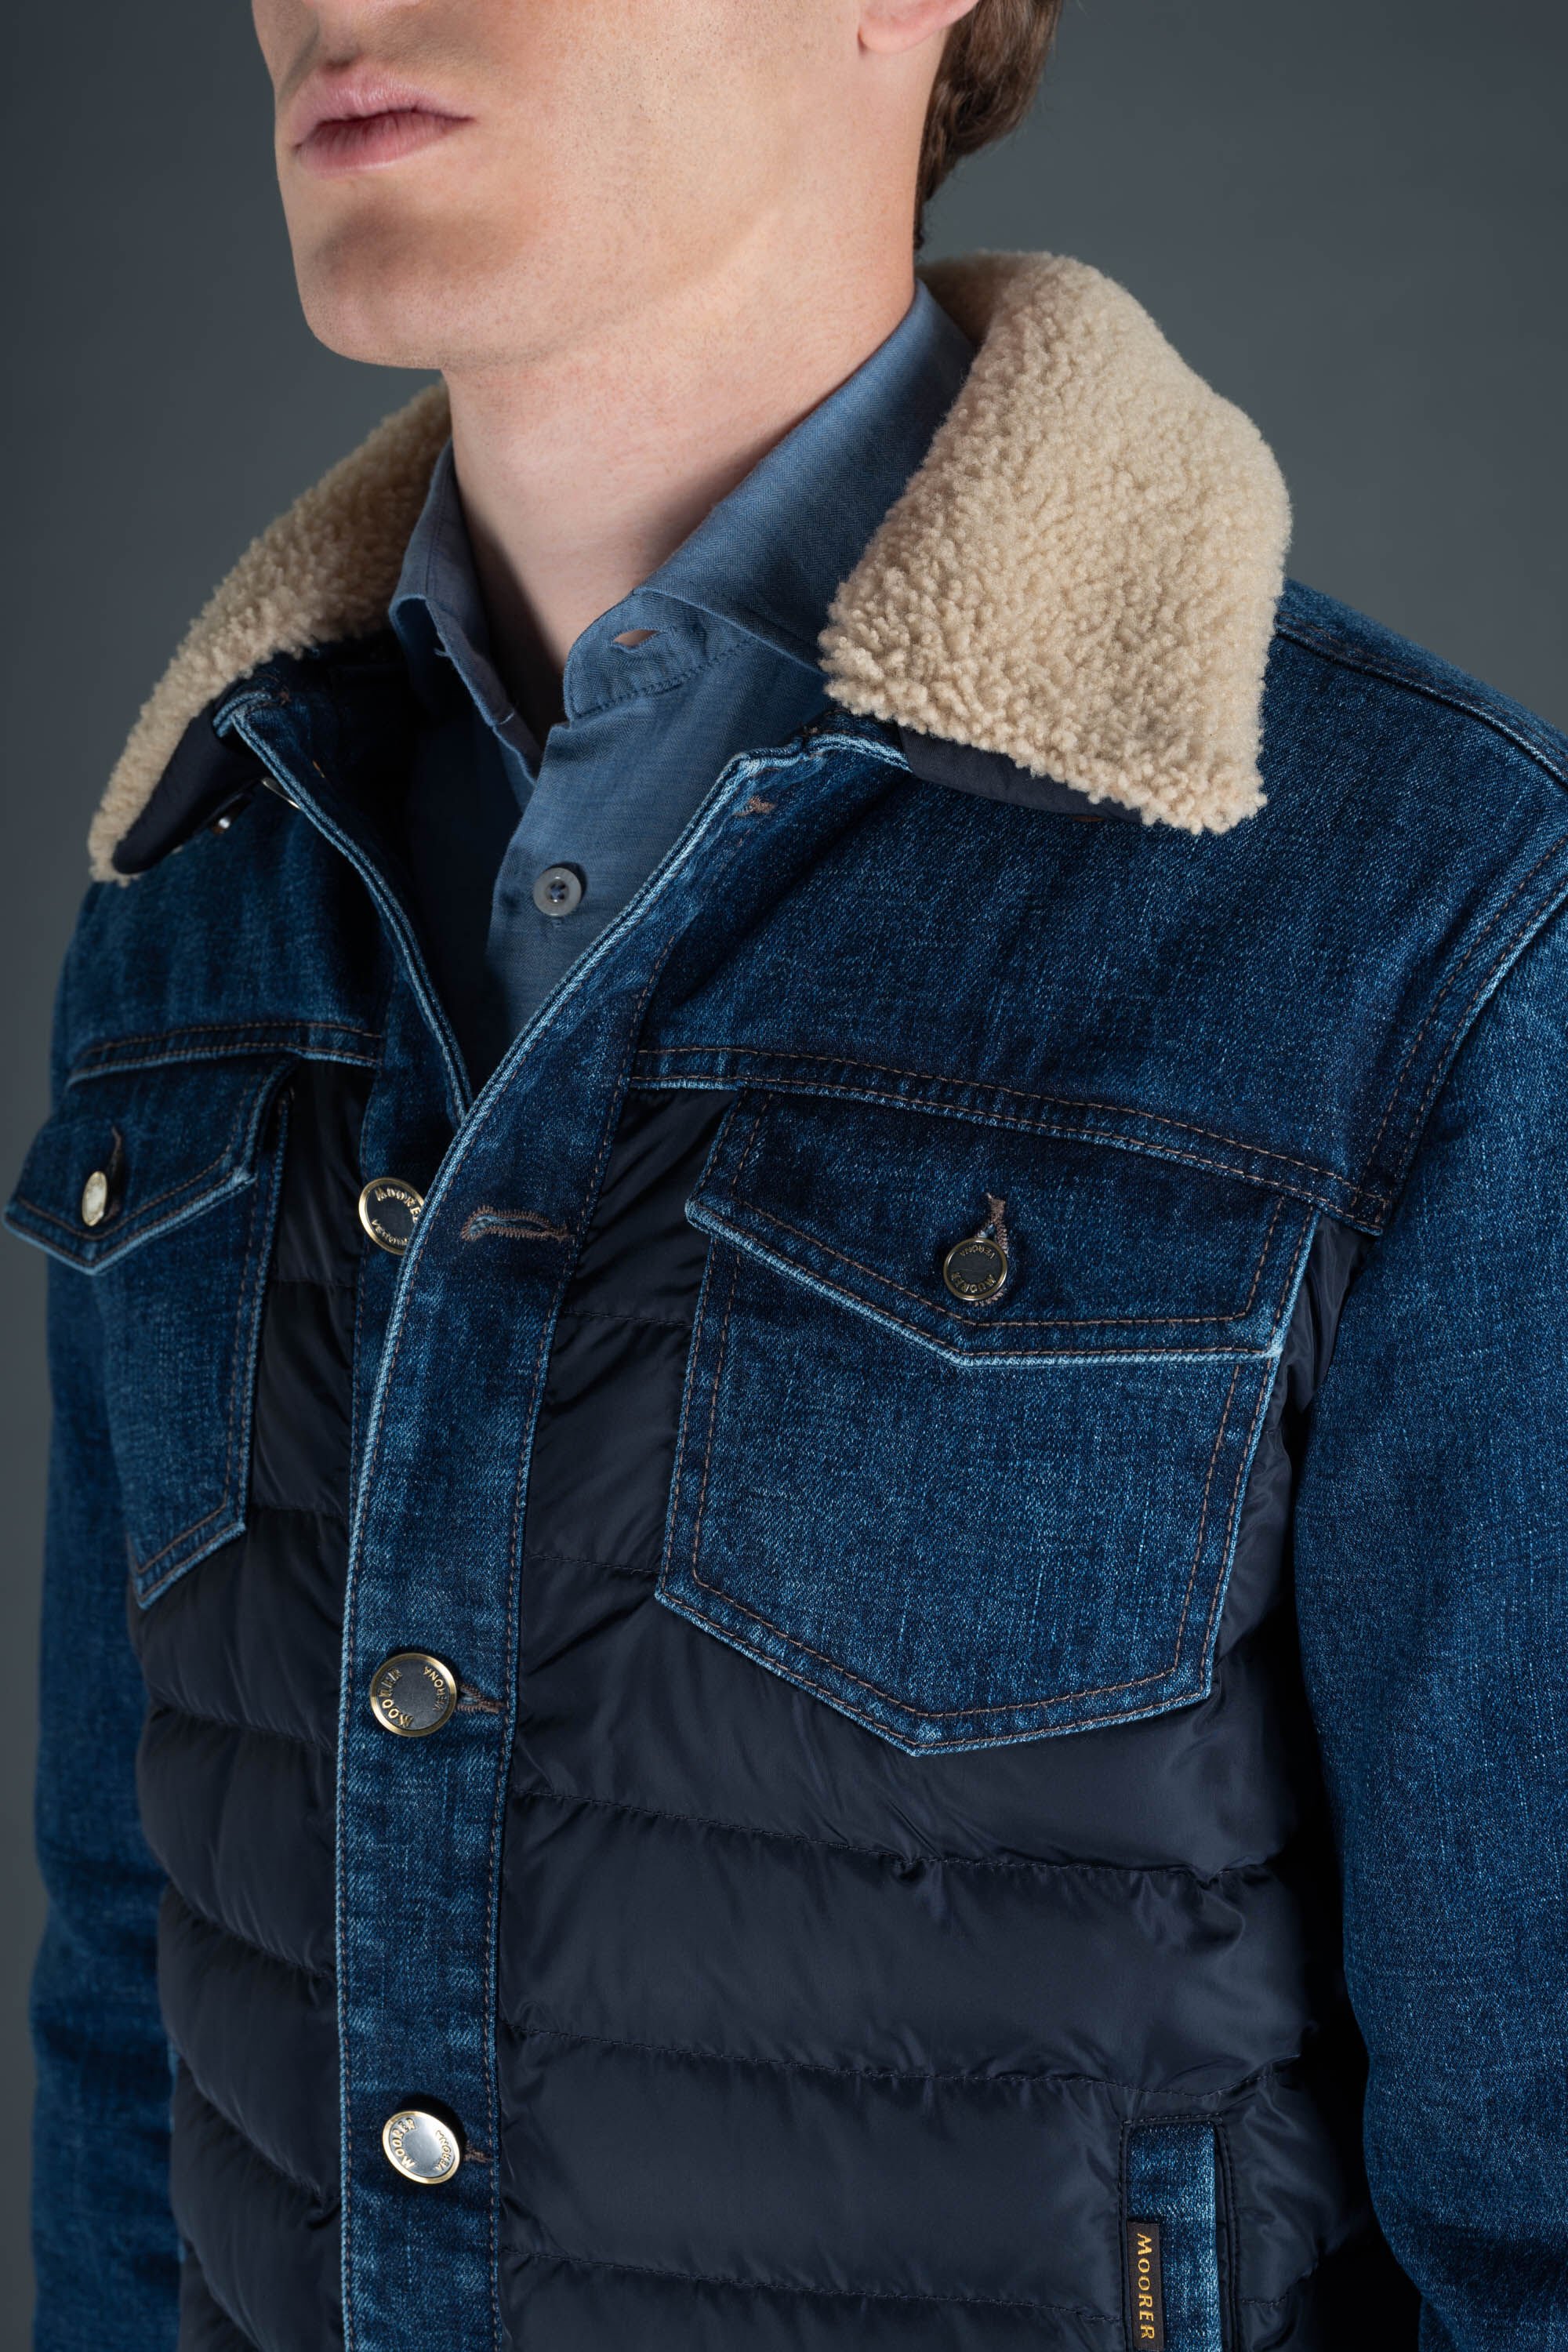 MONDOR-FUR-104S in BLUE: Luxury Italian Jackets for Men | MooRER®